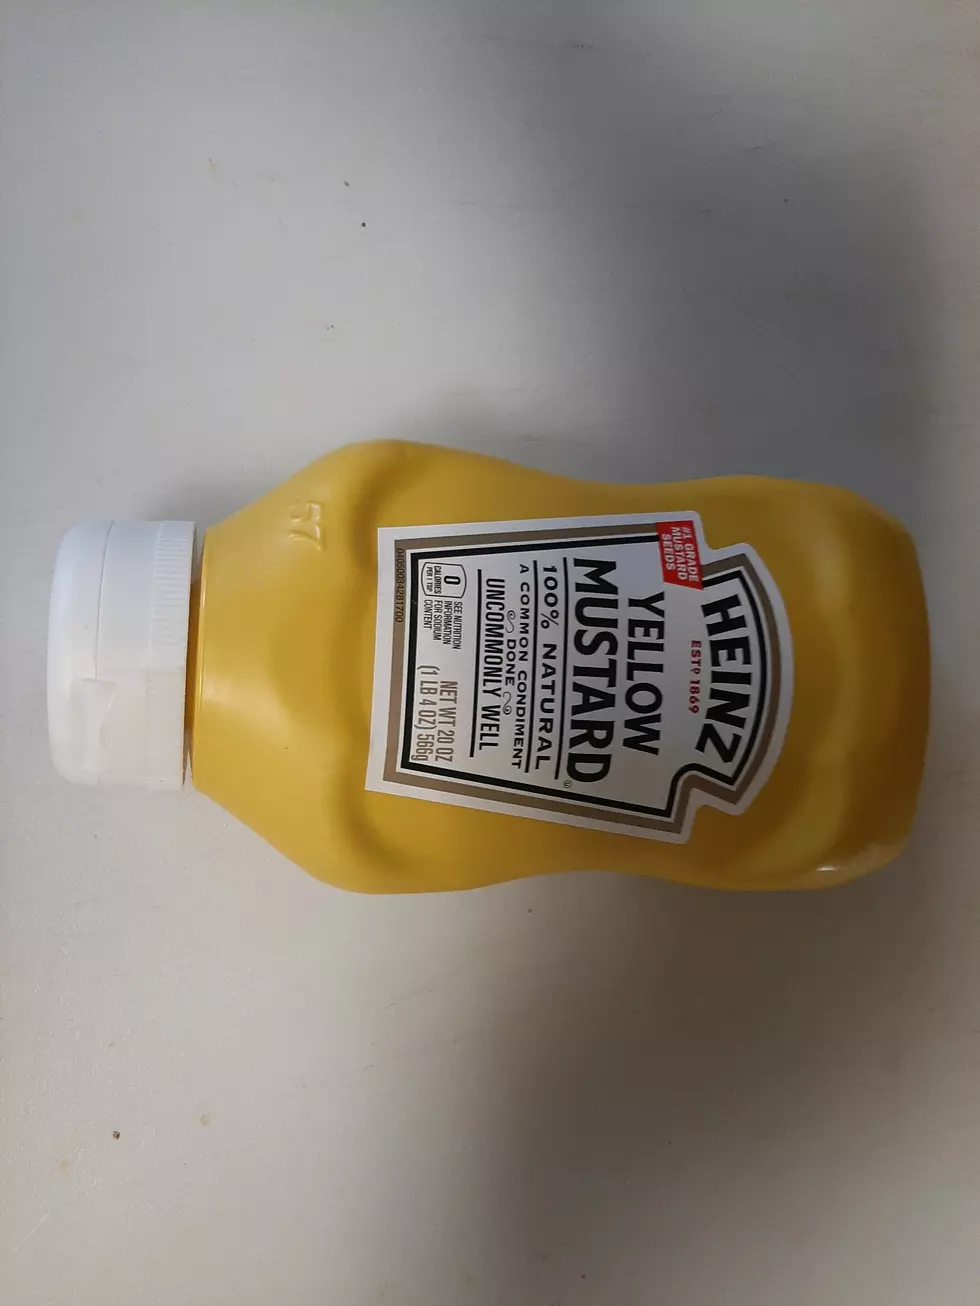 Does mustard really stop cramping?